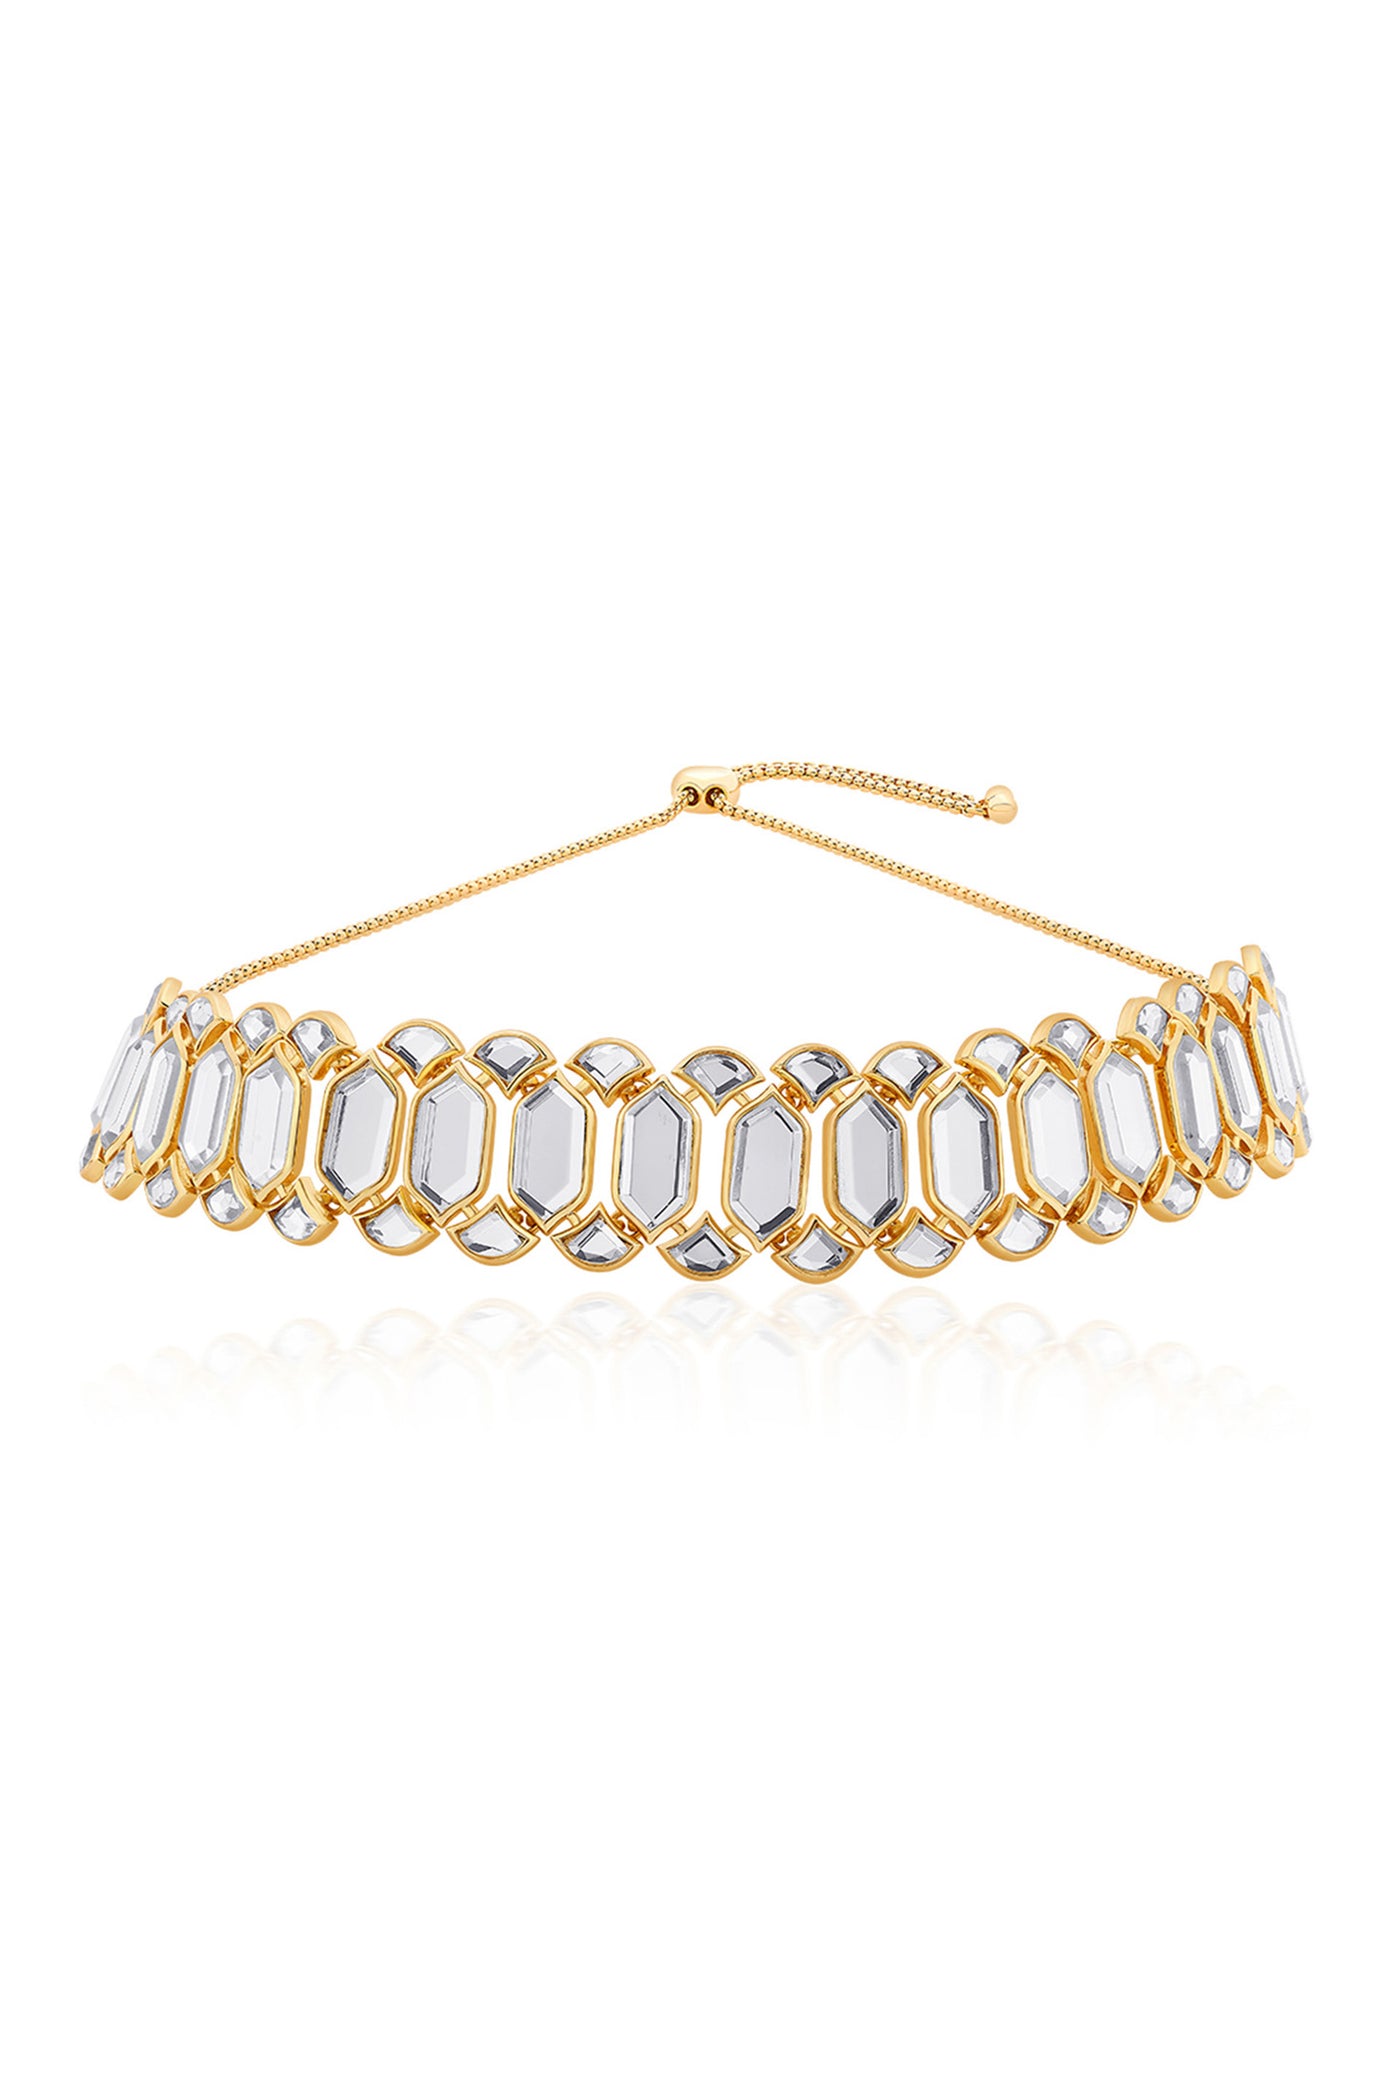 Isharya Amara Mirror Choker Necklace fashion jewellery online shopping melange singapore indian designer wear